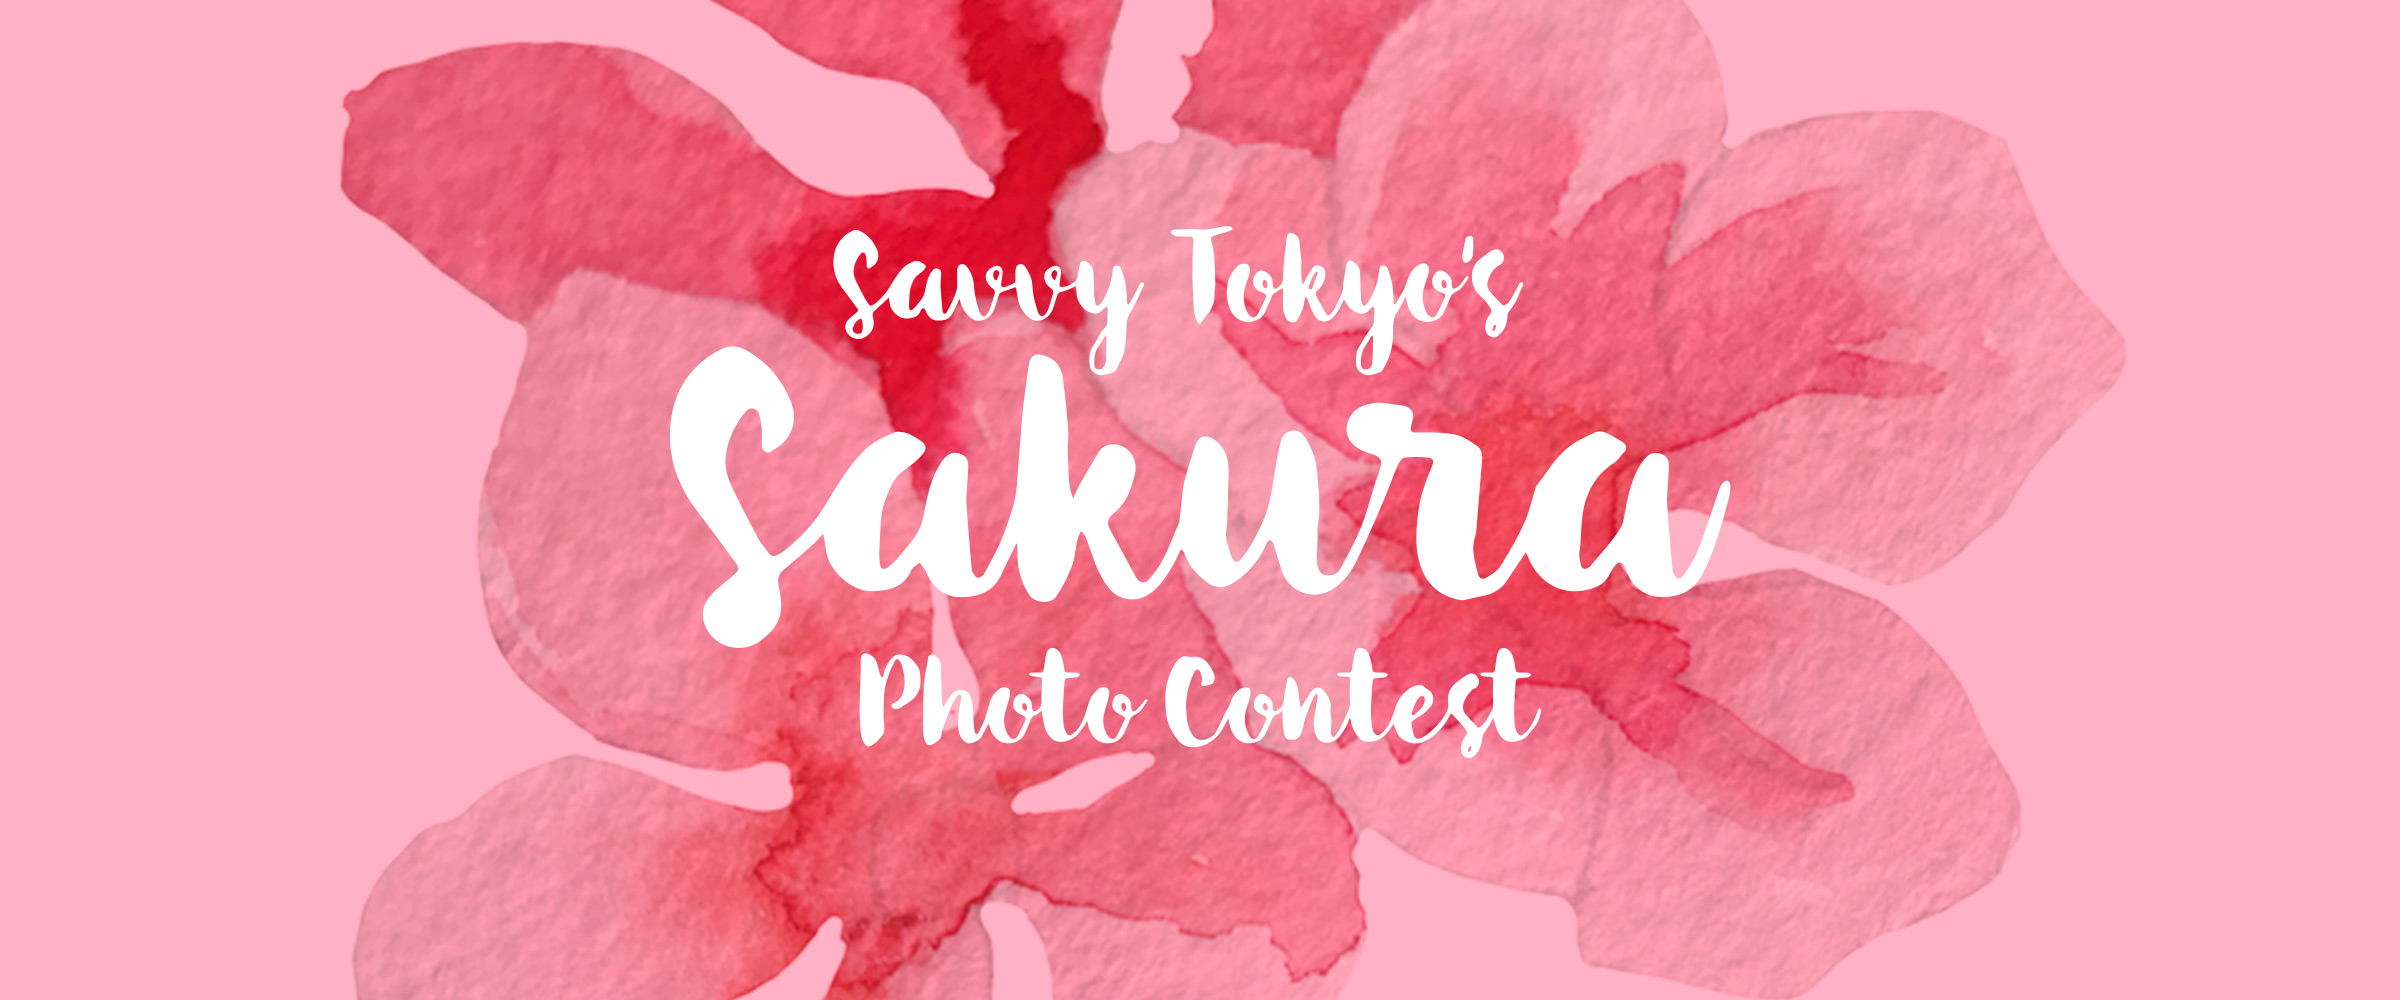 Savvy Tokyo Sakura Photo Contests 2020 Until April 30 Savvy Tokyo